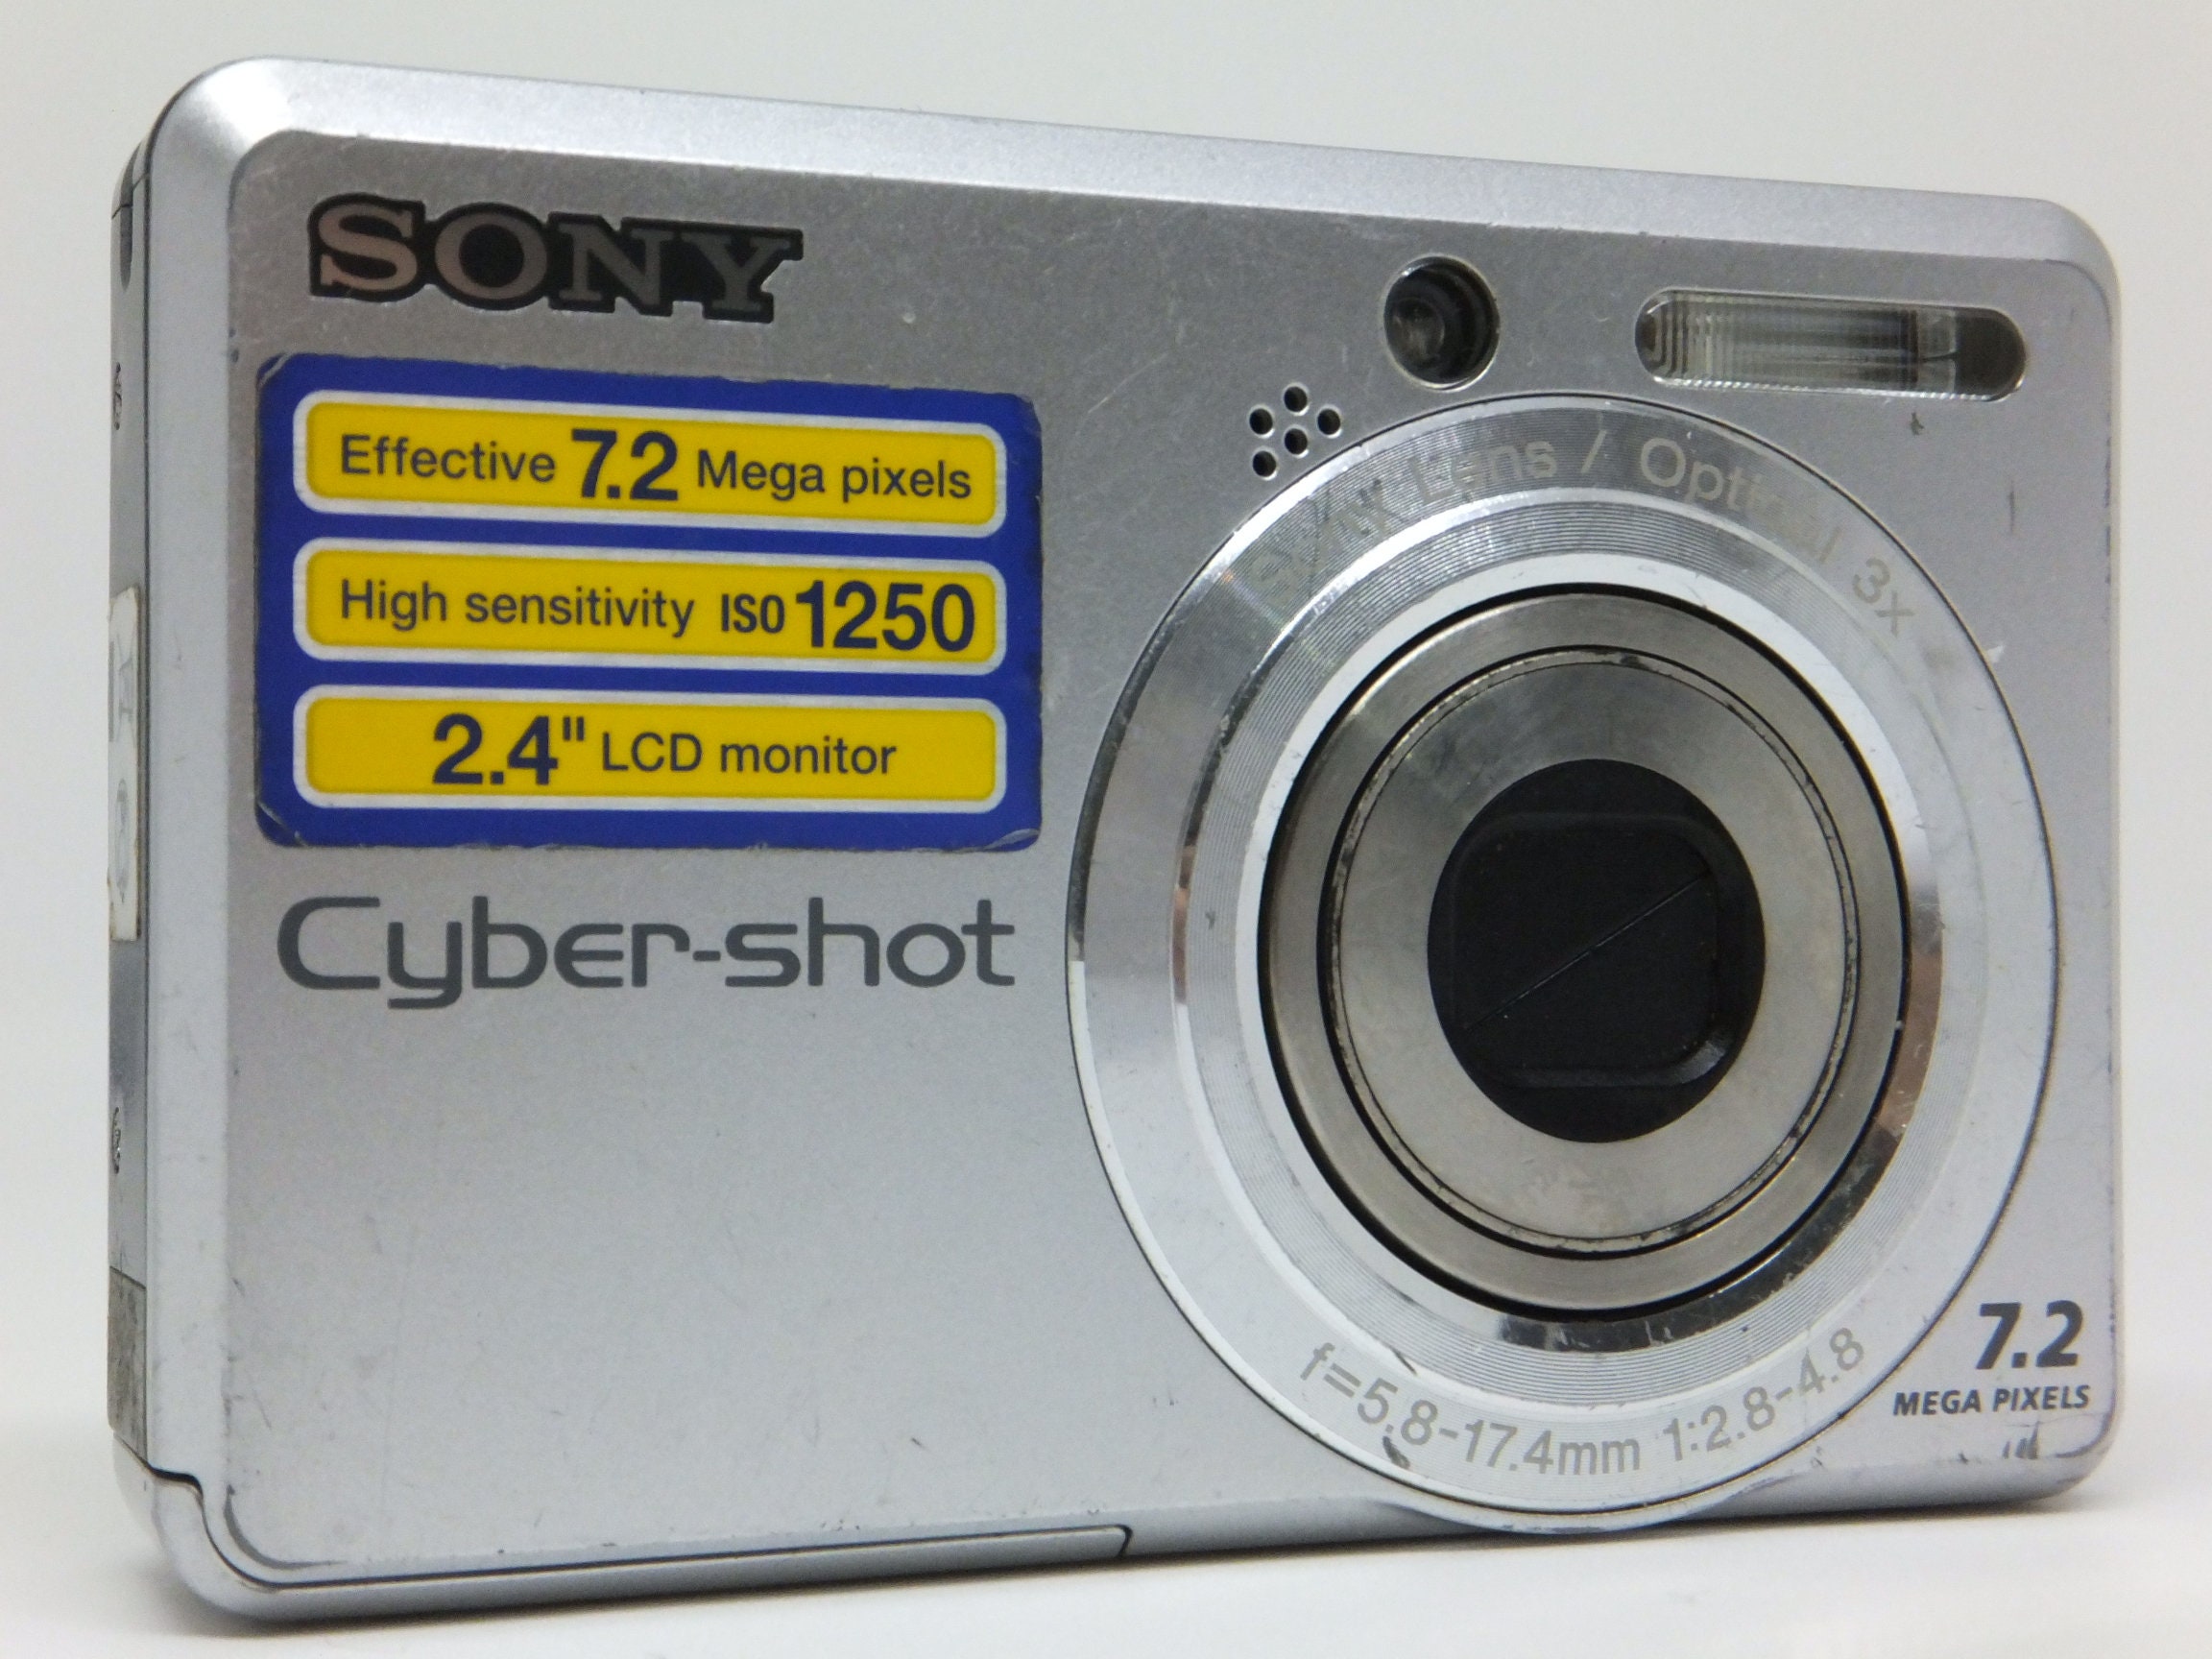 Sony Cyber-shot DSC-W200 12.1MP Digital Camera Silver ,Works